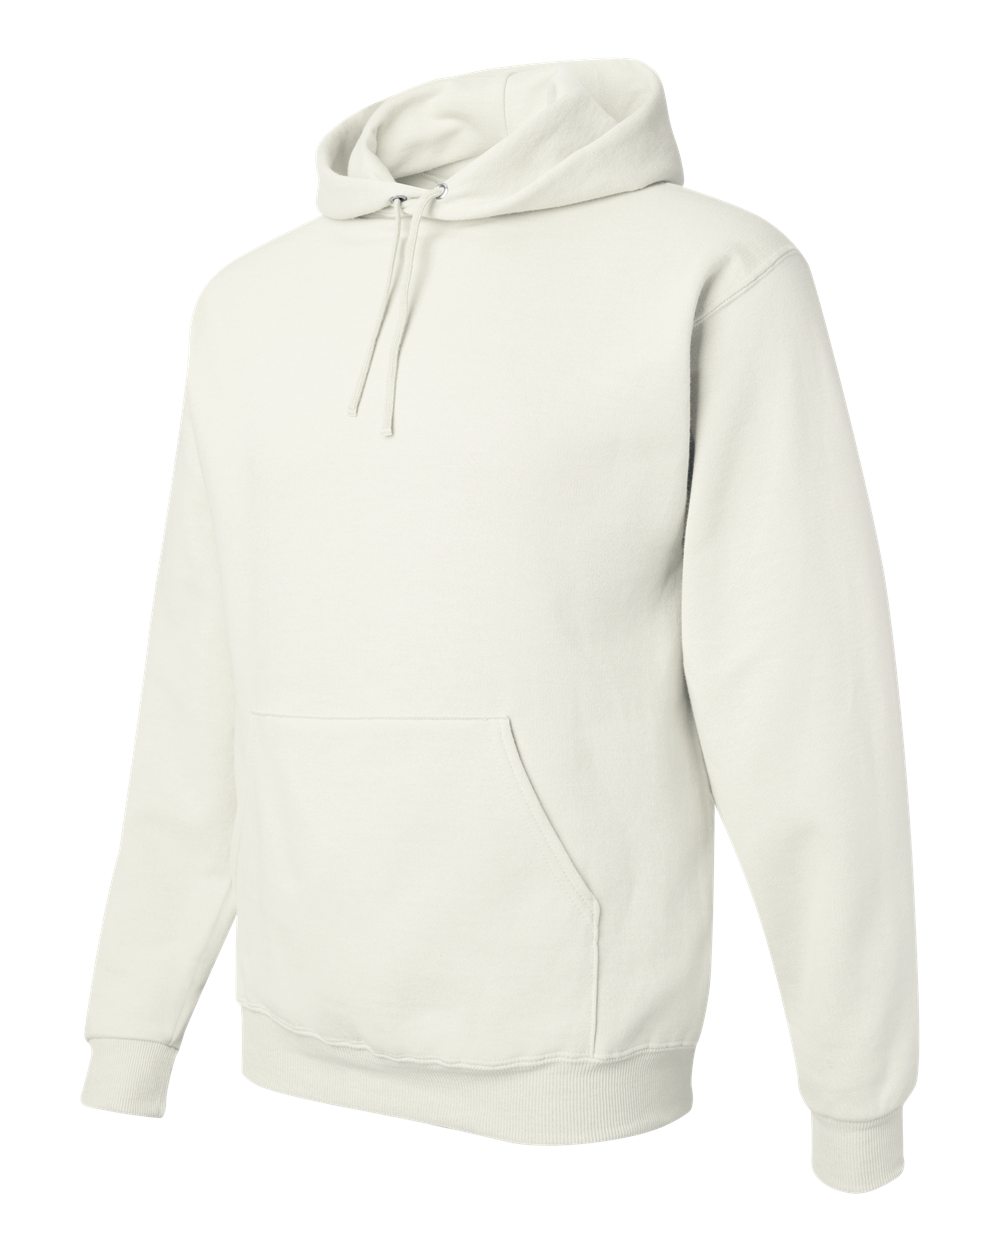 JERZEES NuBlend Hooded Sweatshirt Hoodie 996MR S-2XL Cotton/Polyester